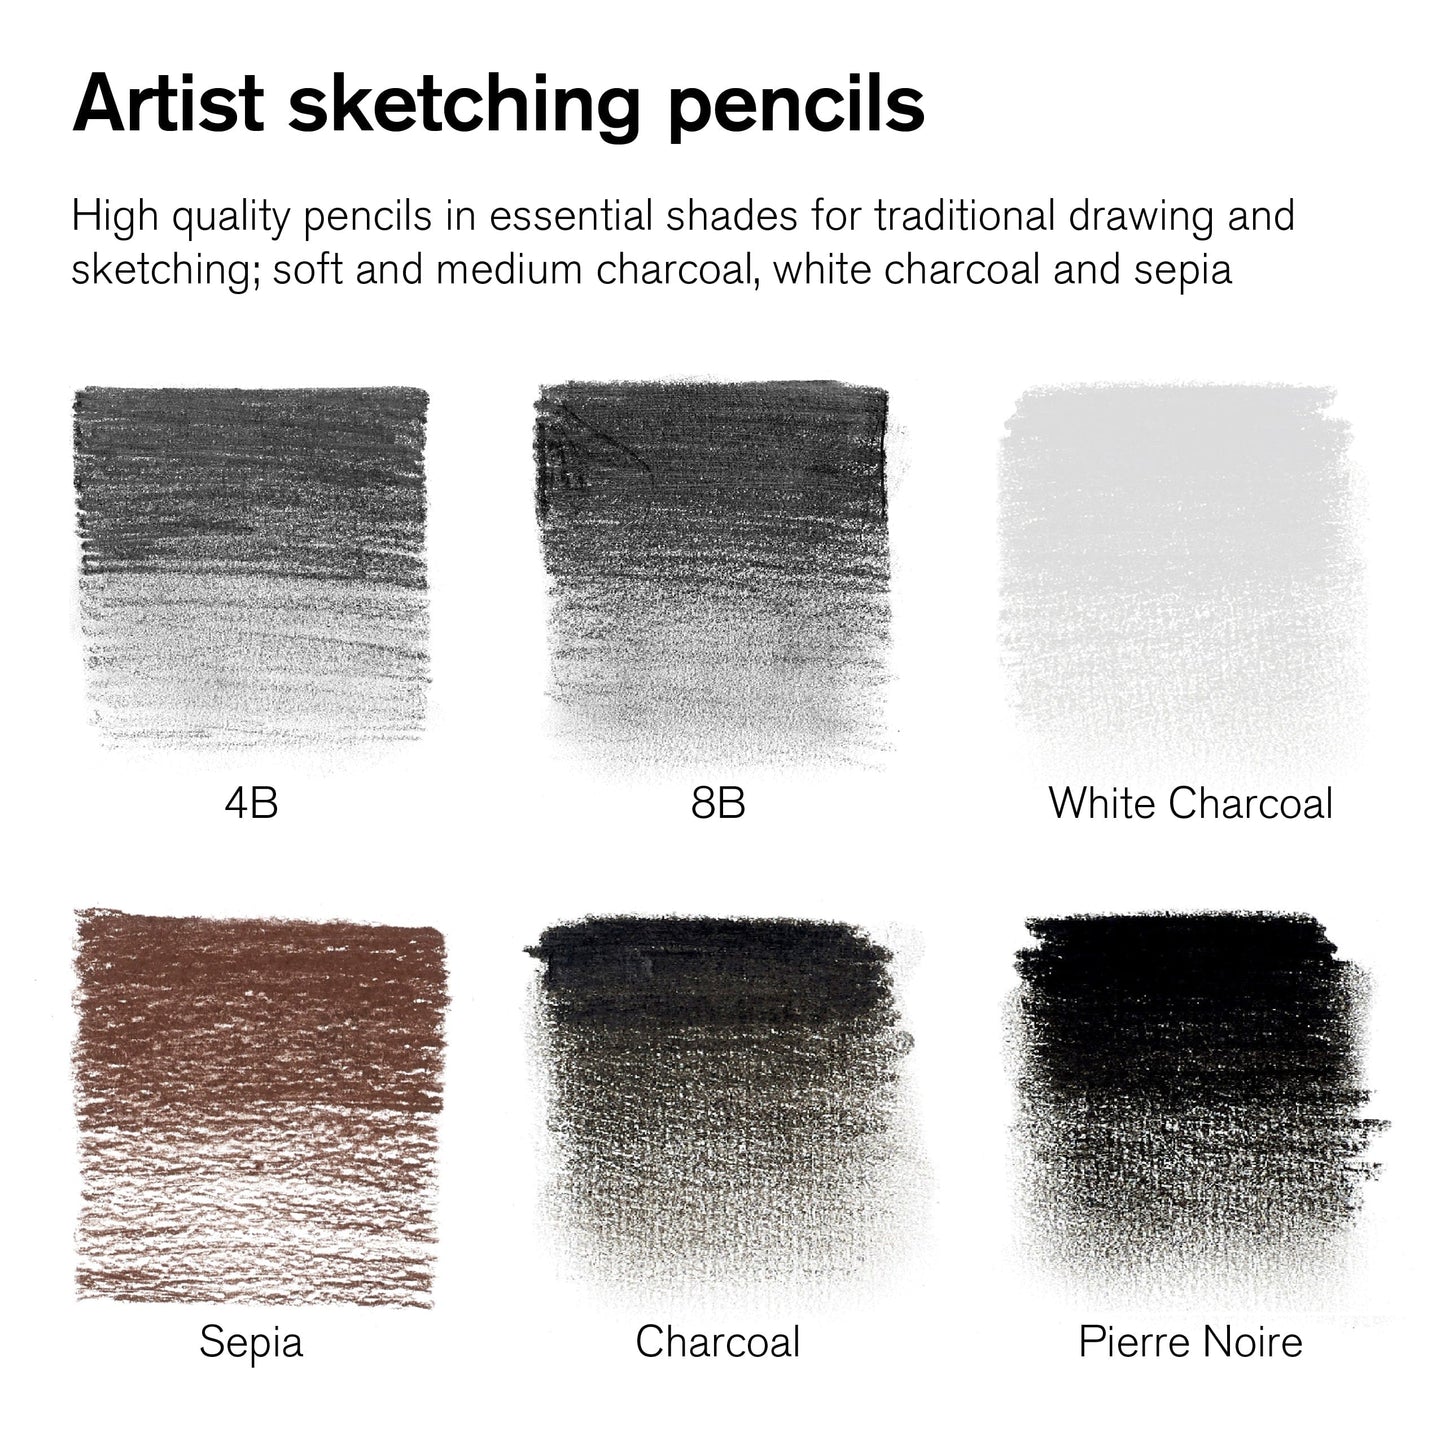 Winsor & Newton Graphite Pencil Set Winsor & Newton - Sketching Pencils - Set of 6 - Item #0490011